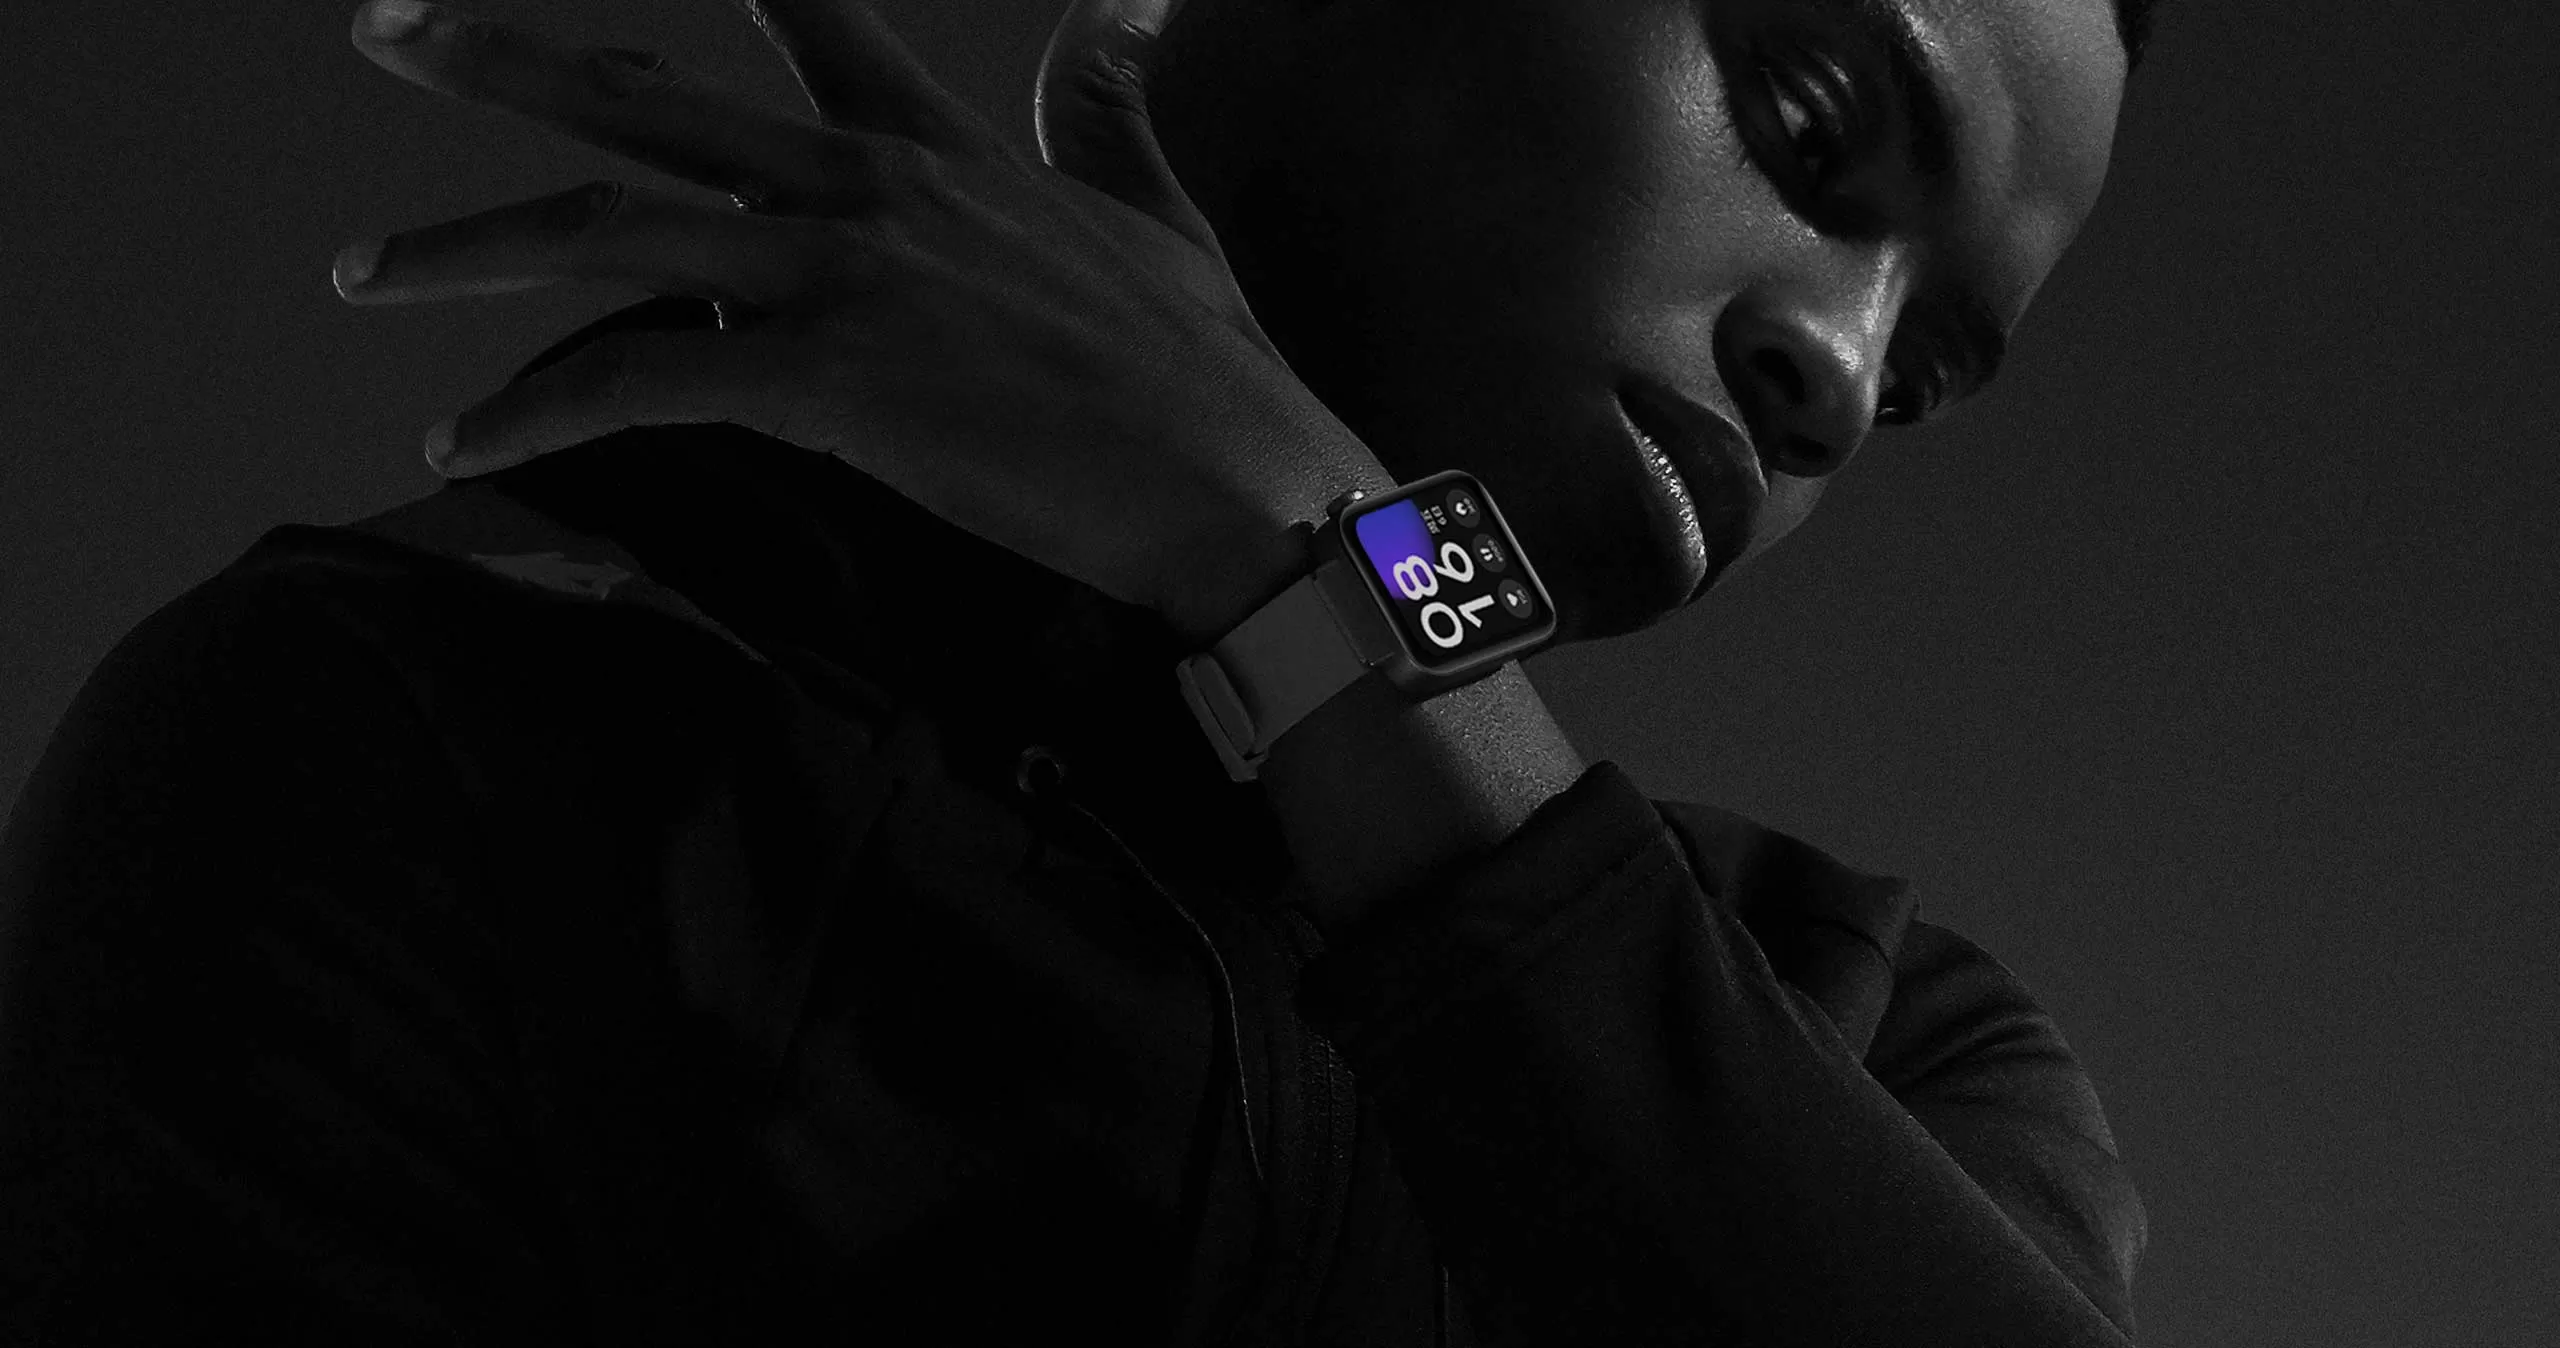 Xiaomi watch esim. Картинки гуччи 1920x1080. Xiaomi mi watch, синие. Умные часы Xiaomi мужские картинки. Умные часы Xiaomi Redmi watch 3 черный отзывы.